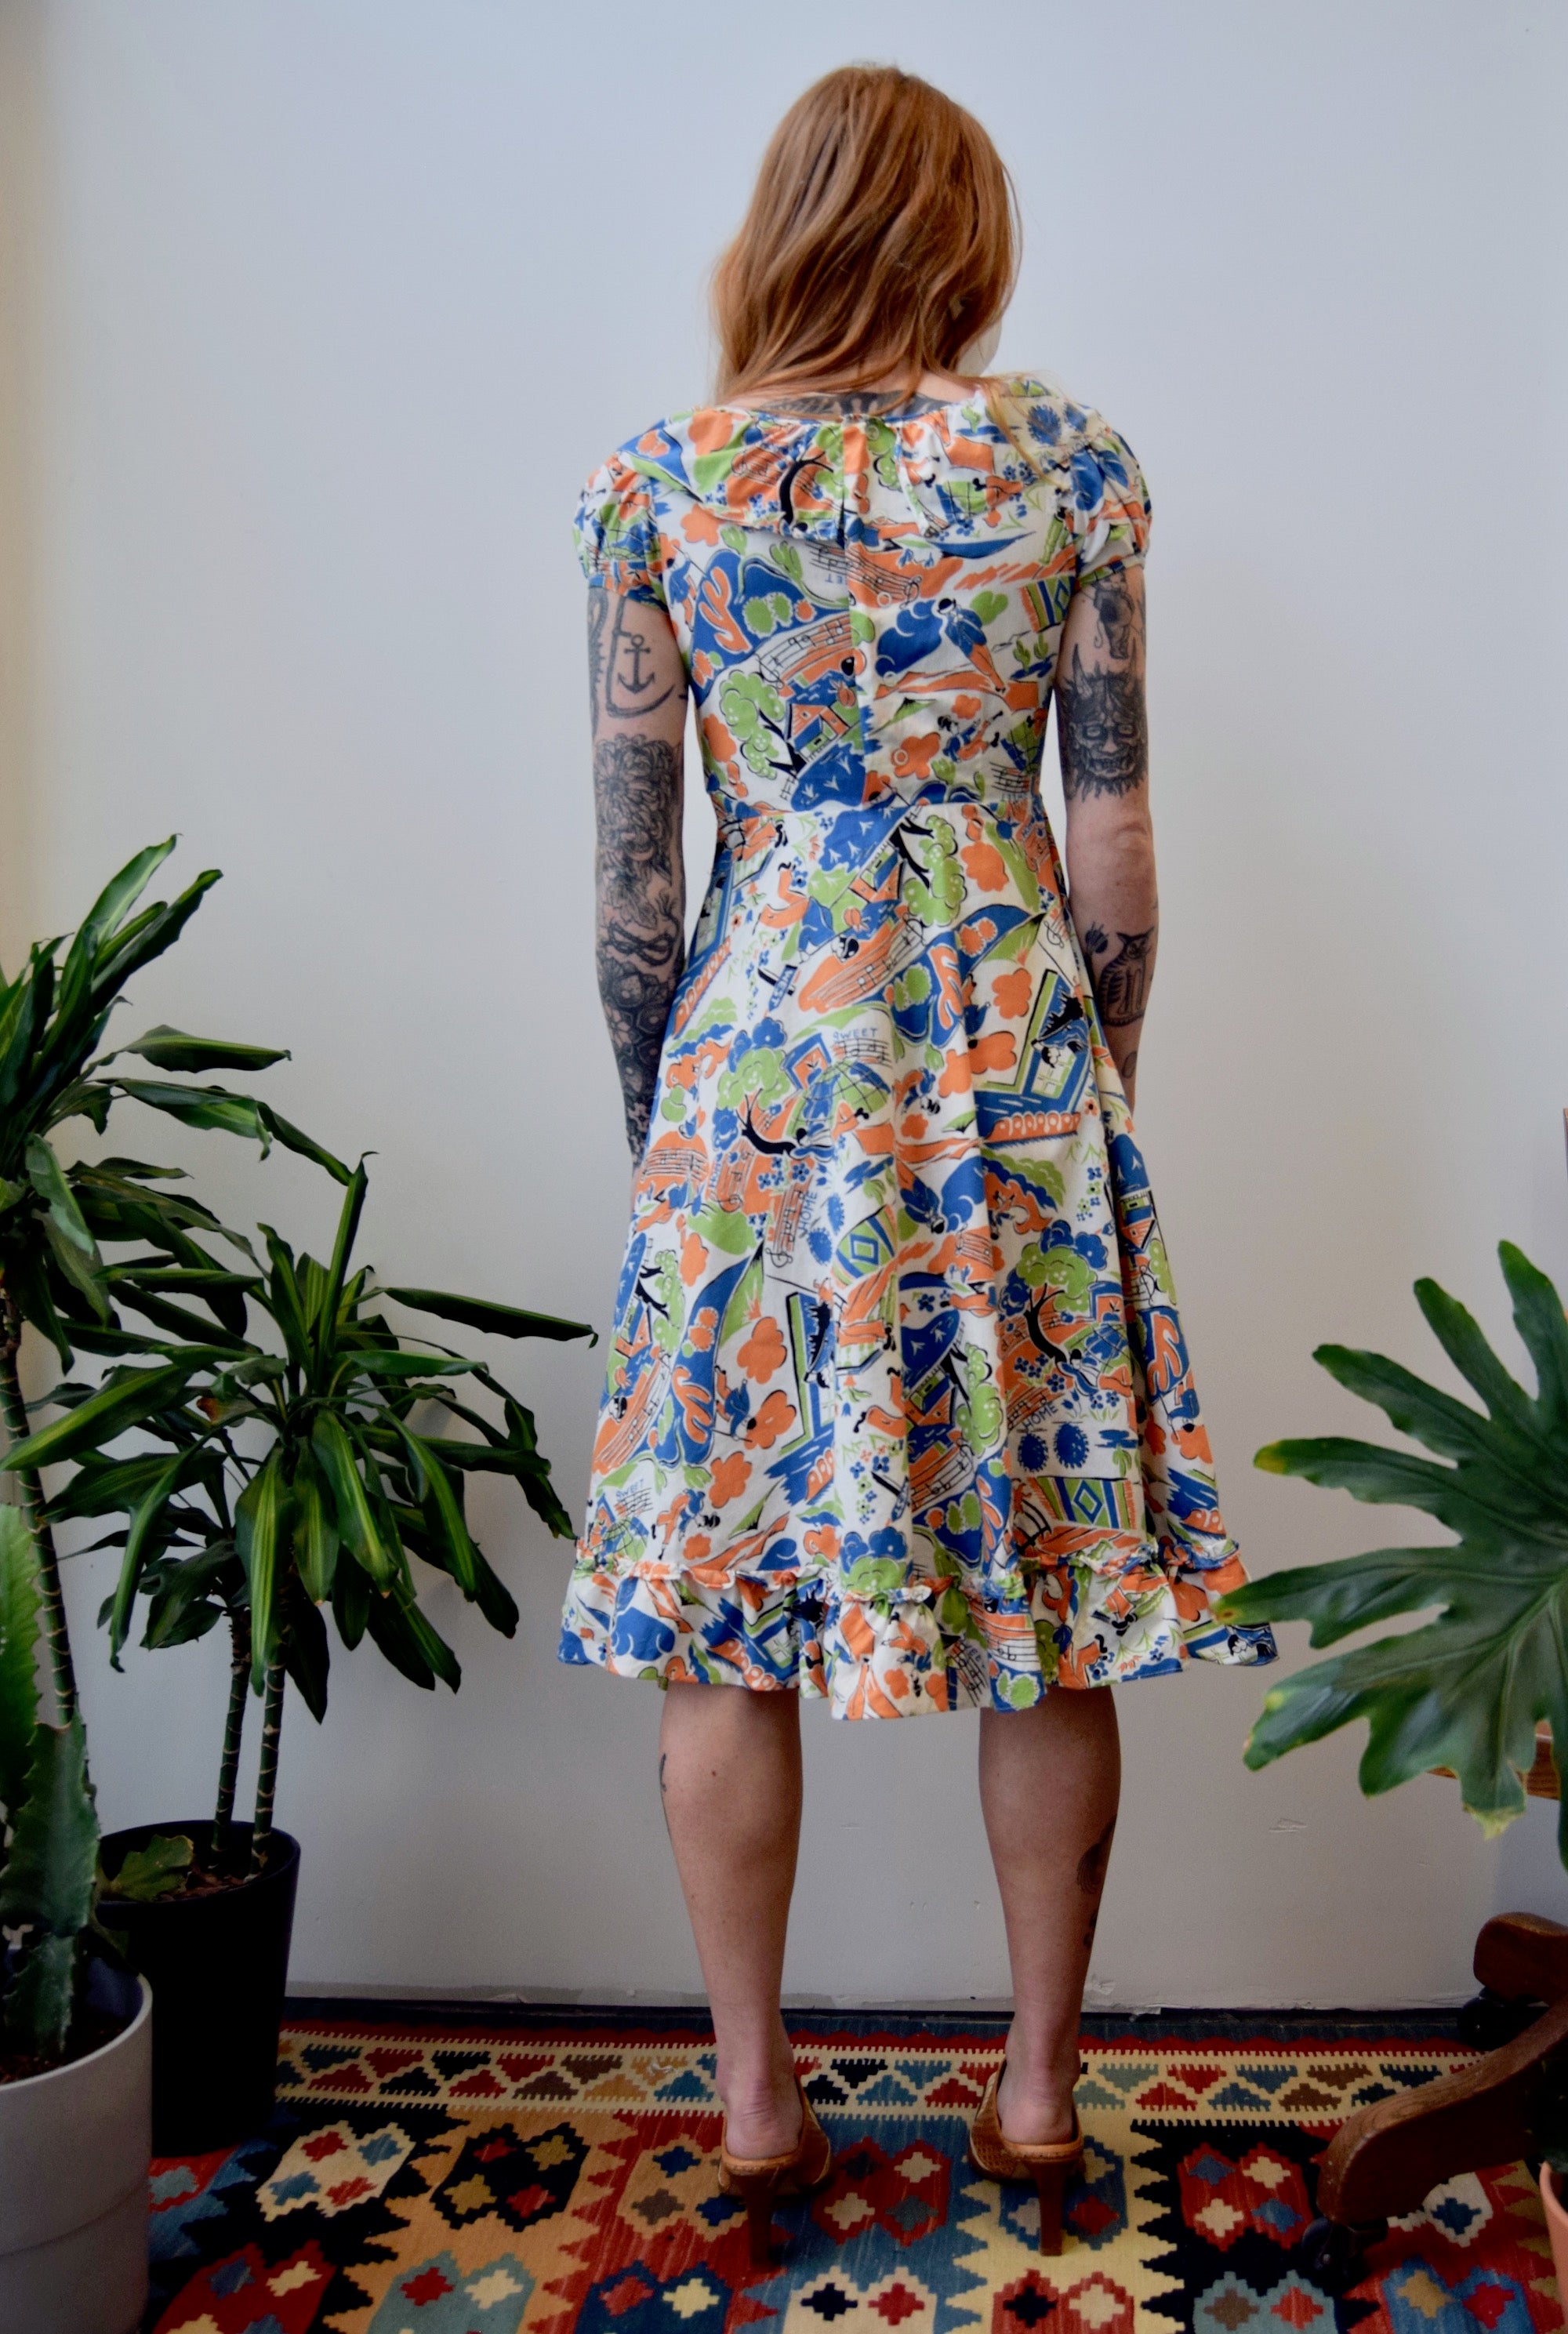 Vintage Novelty Print Dress